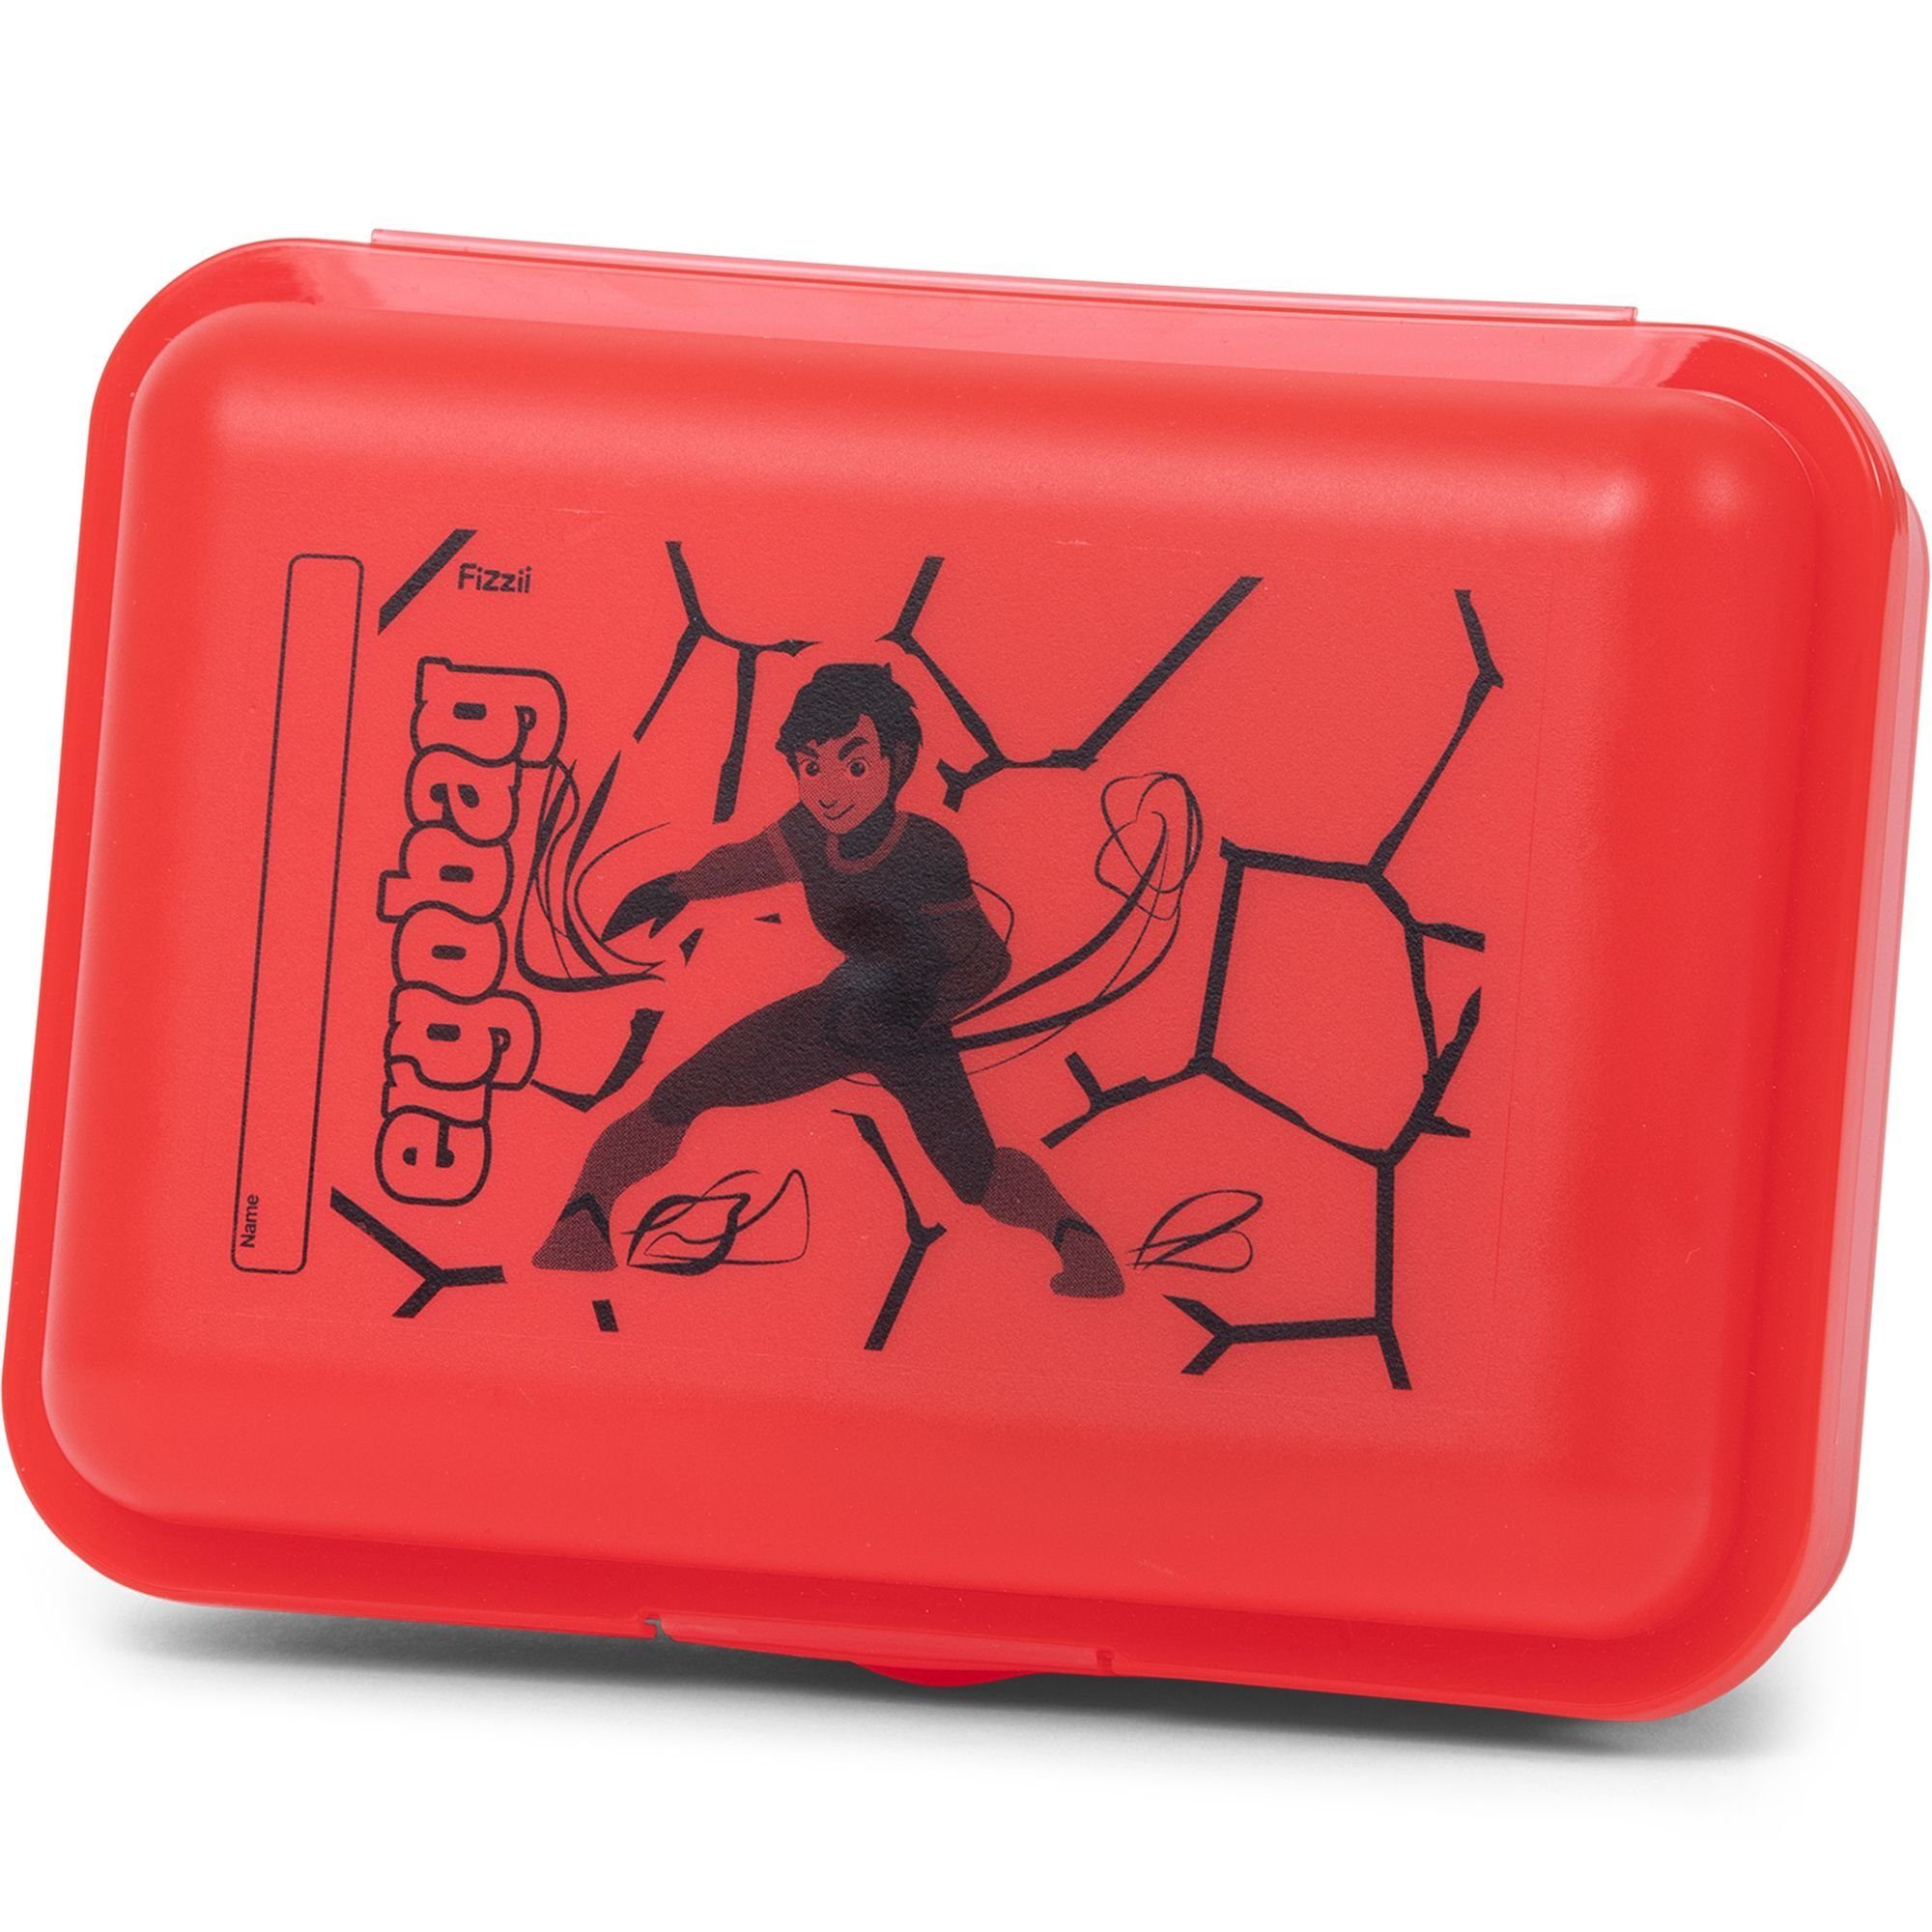 Zubehör, lava rot Kunststoff schwarz supbärheld ergobag Lunchbox Kunststoff,